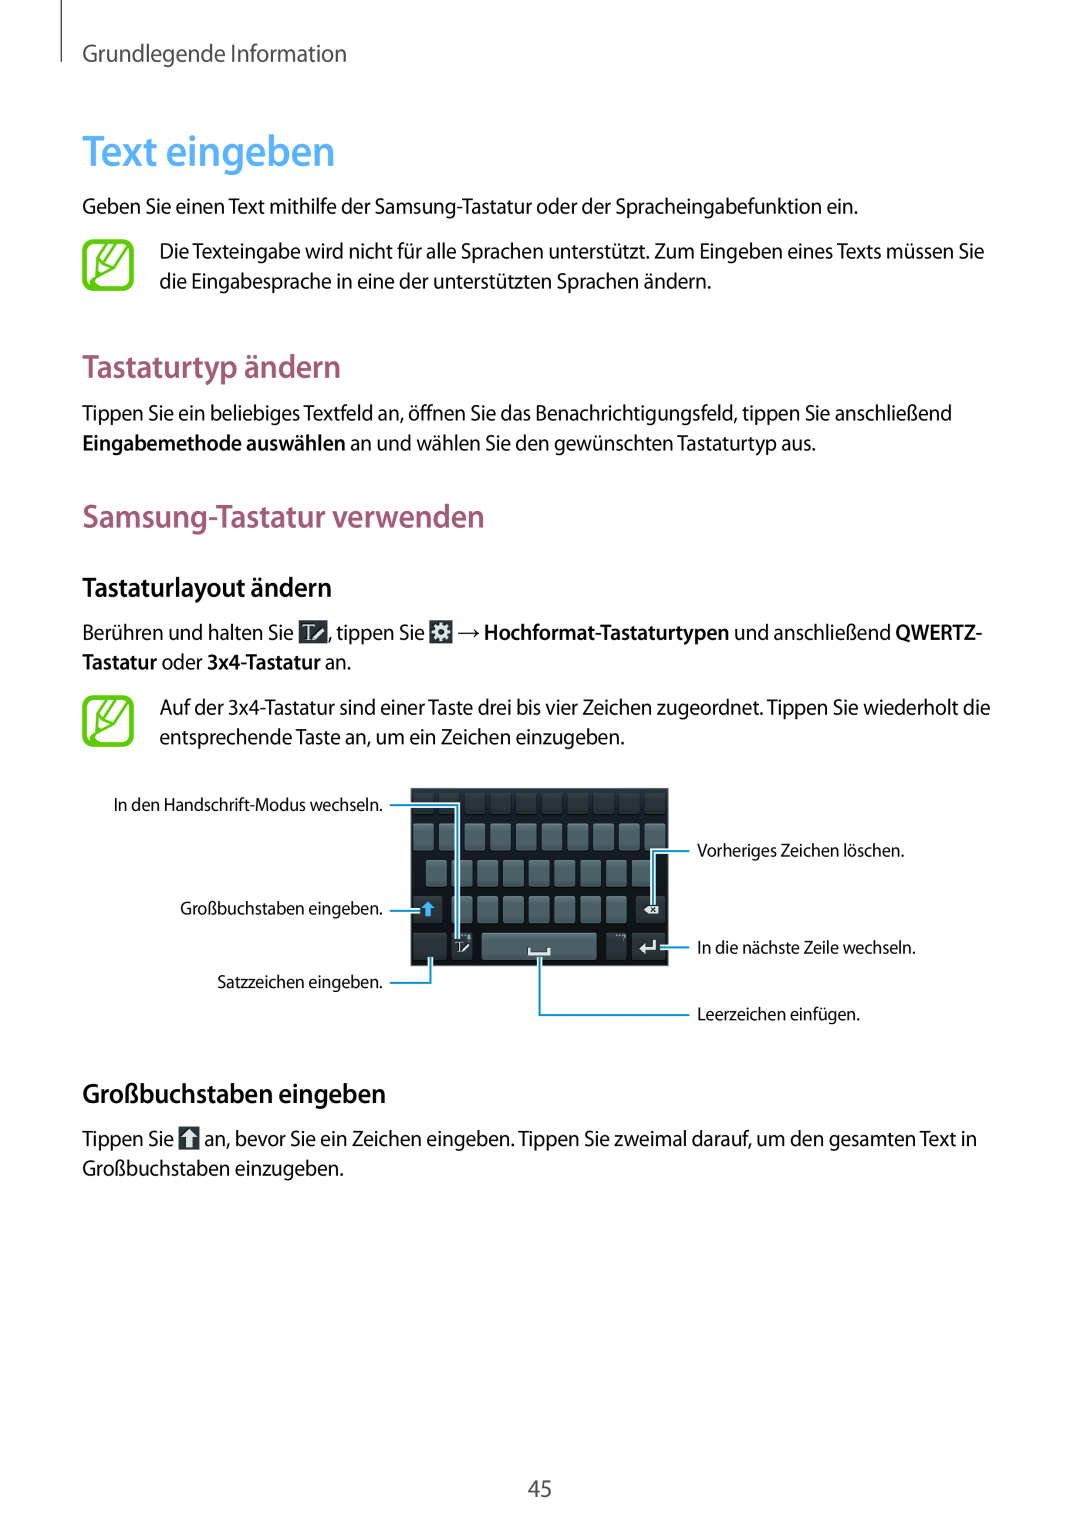 Samsung GT-N7100TADEPL manual Text eingeben, Tastaturtyp ändern, Samsung-Tastatur verwenden, Tastaturlayout ändern 